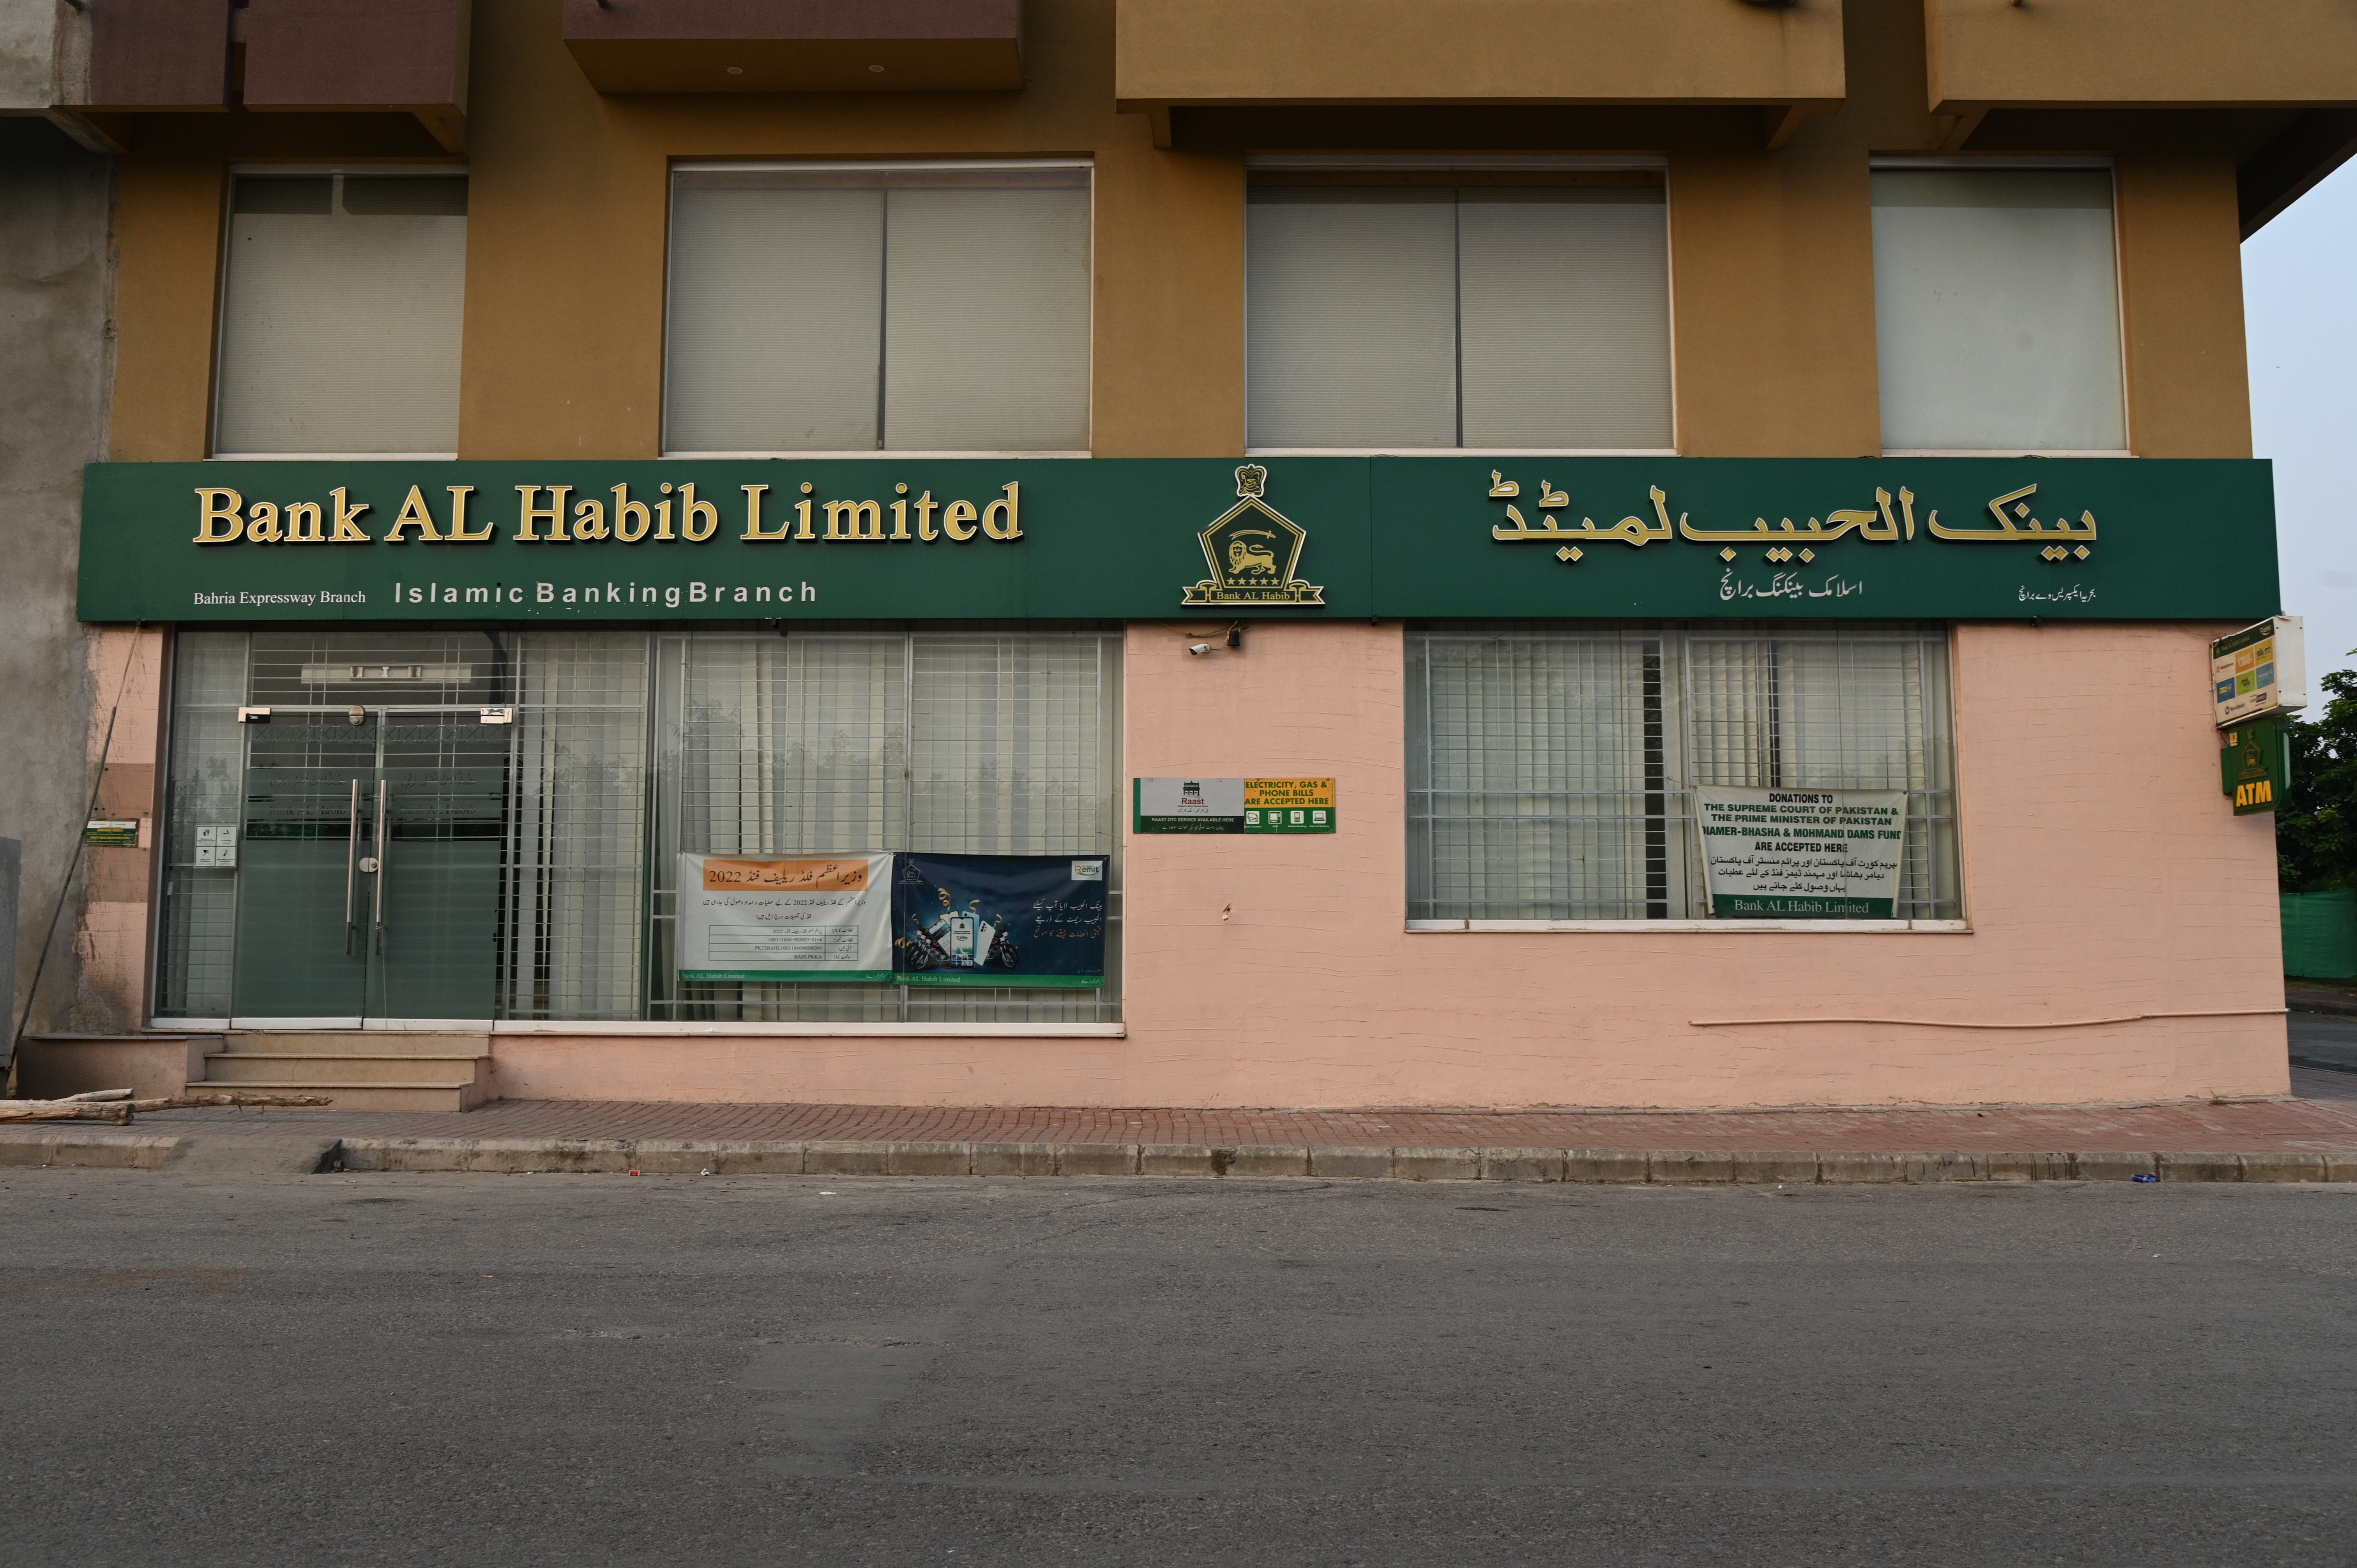 Bank AL Habib Limited Islamic Banking Branch , Bahria expressway Branch